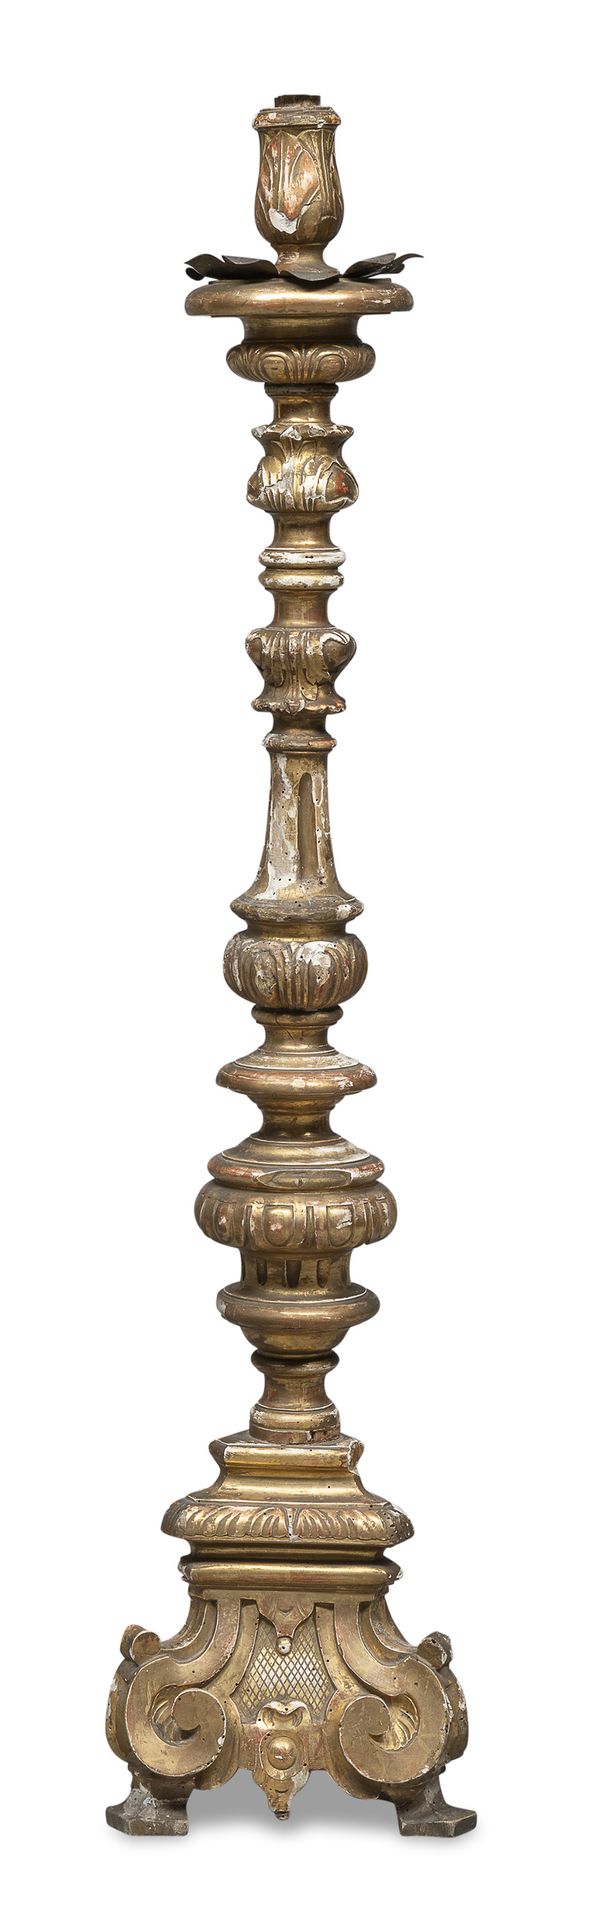 Null 镀金的木质地板烛台，可能是威尼斯，18世纪

轴上有结，底座上有纹章和卷曲的植物涡旋。卡特鲁什脚。

尺寸为123 x 30厘米。